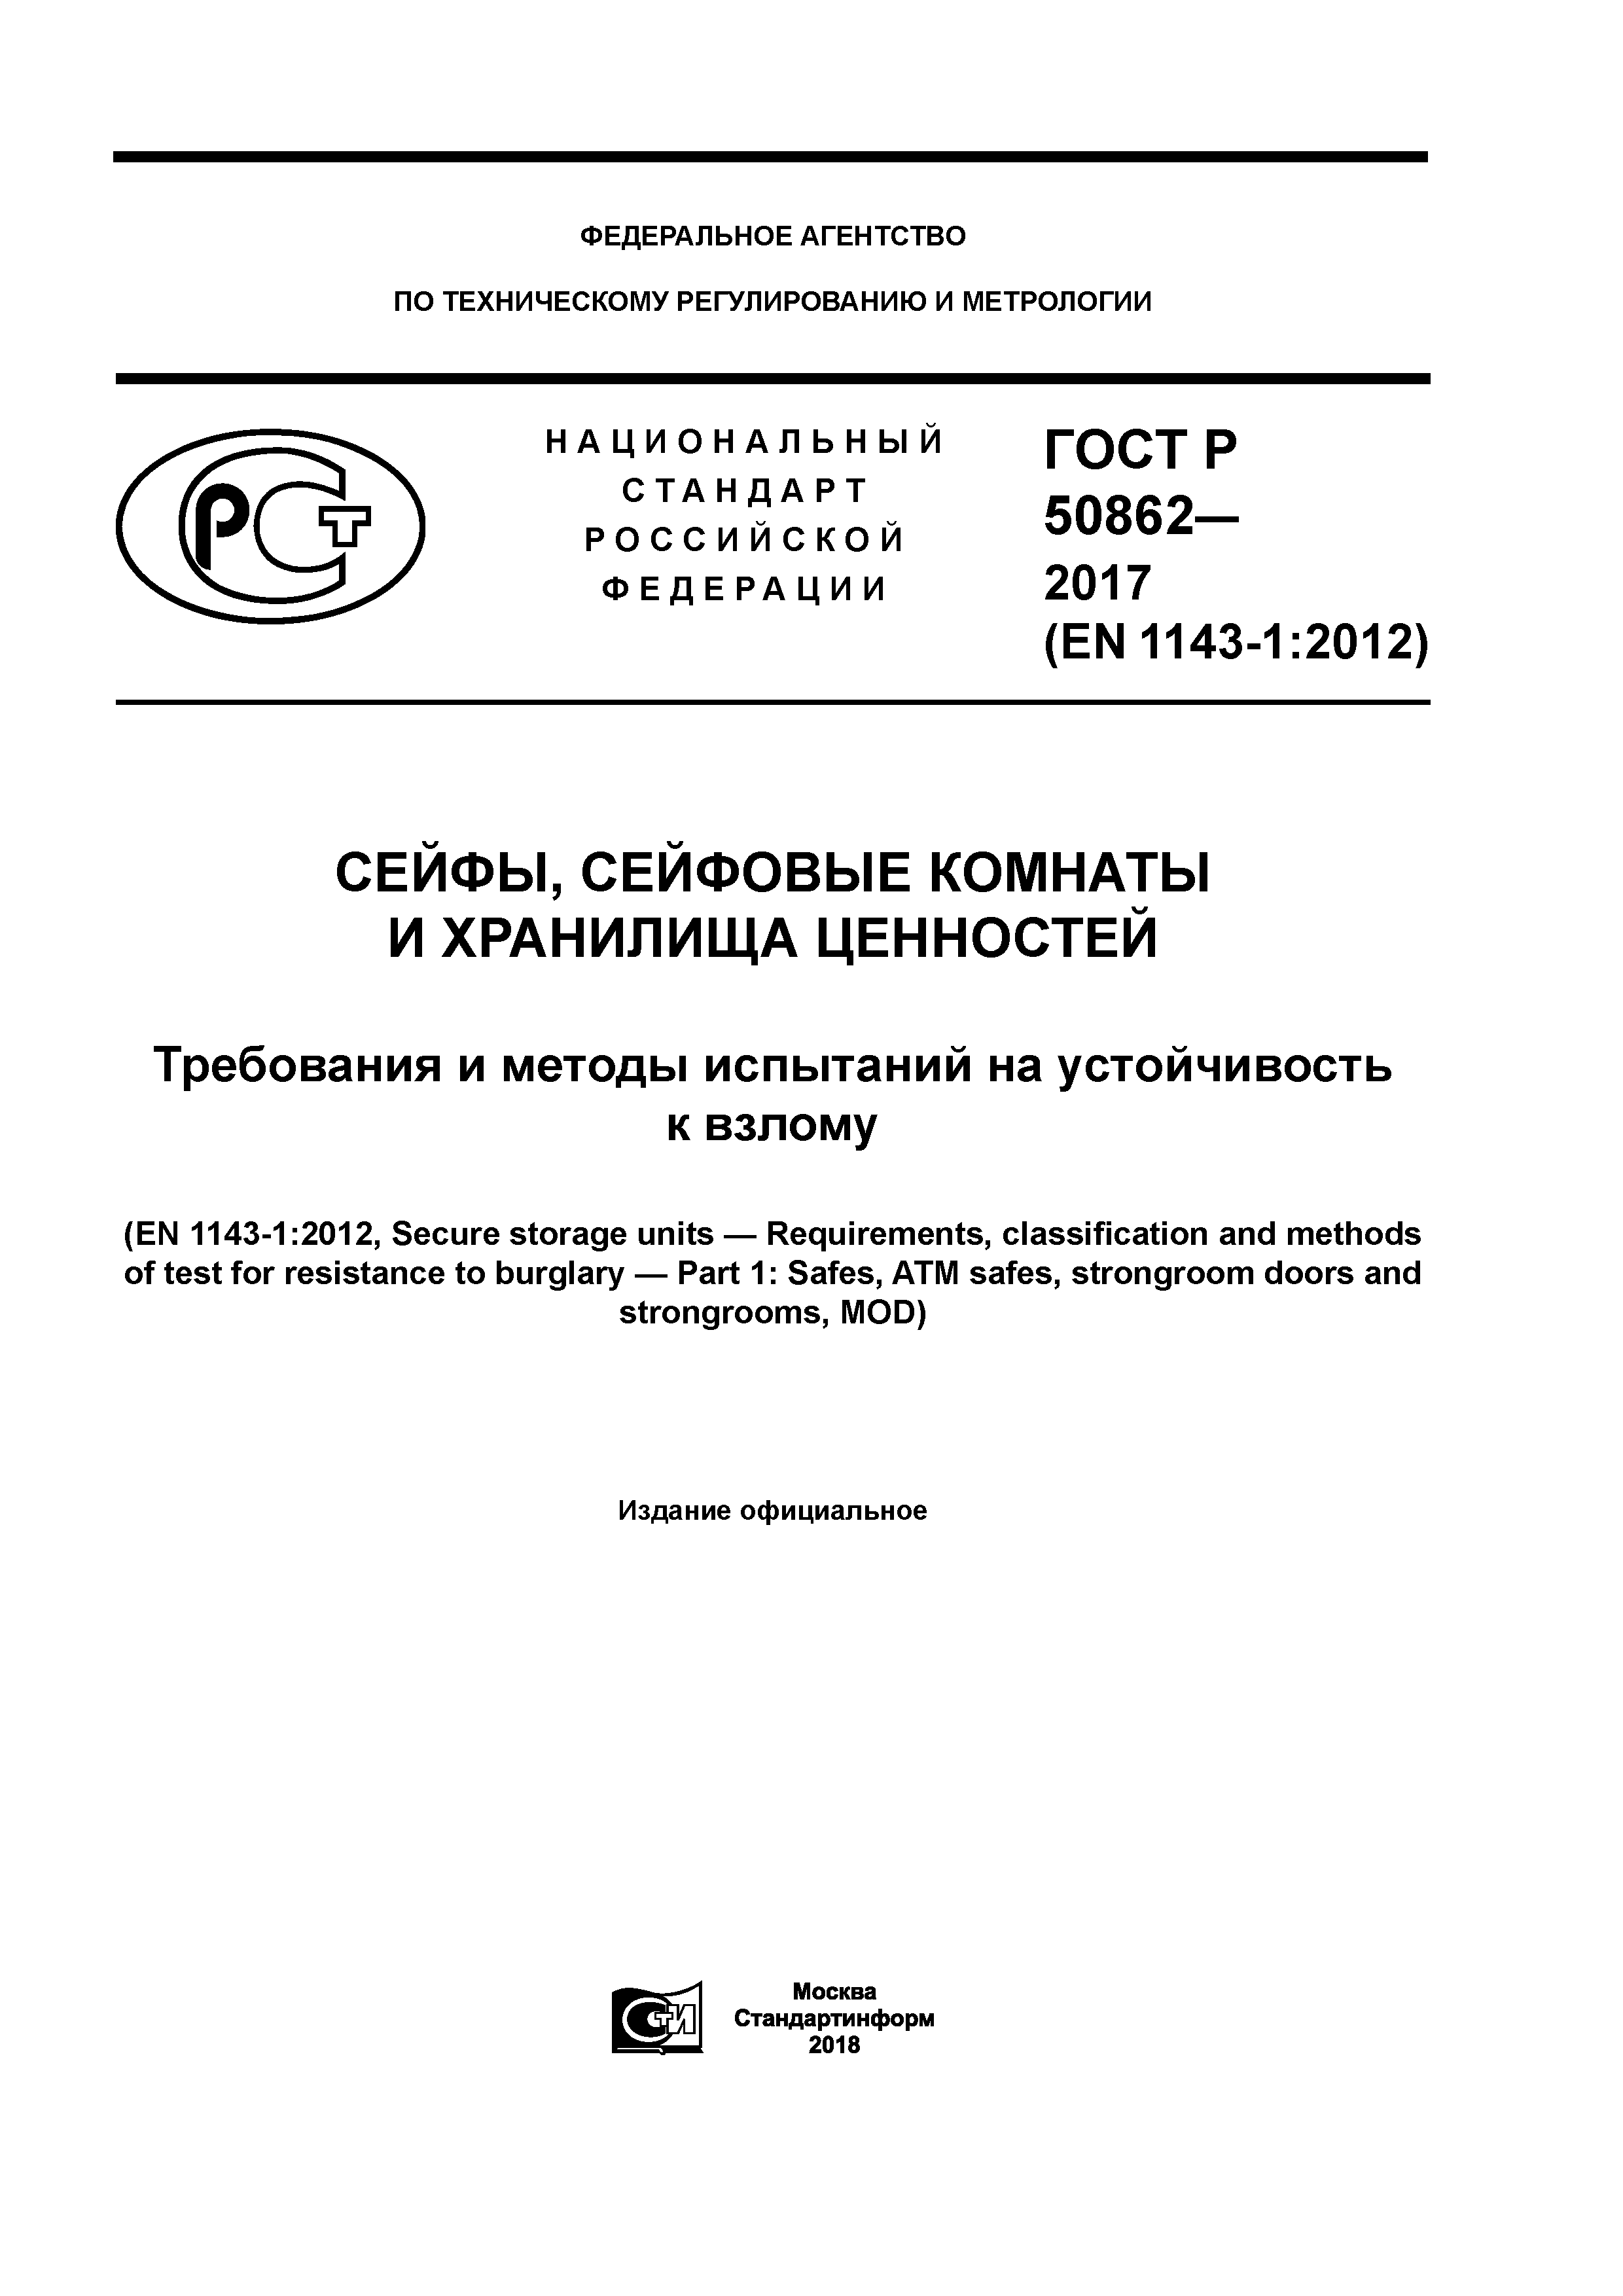 ГОСТ Р 50862-2017